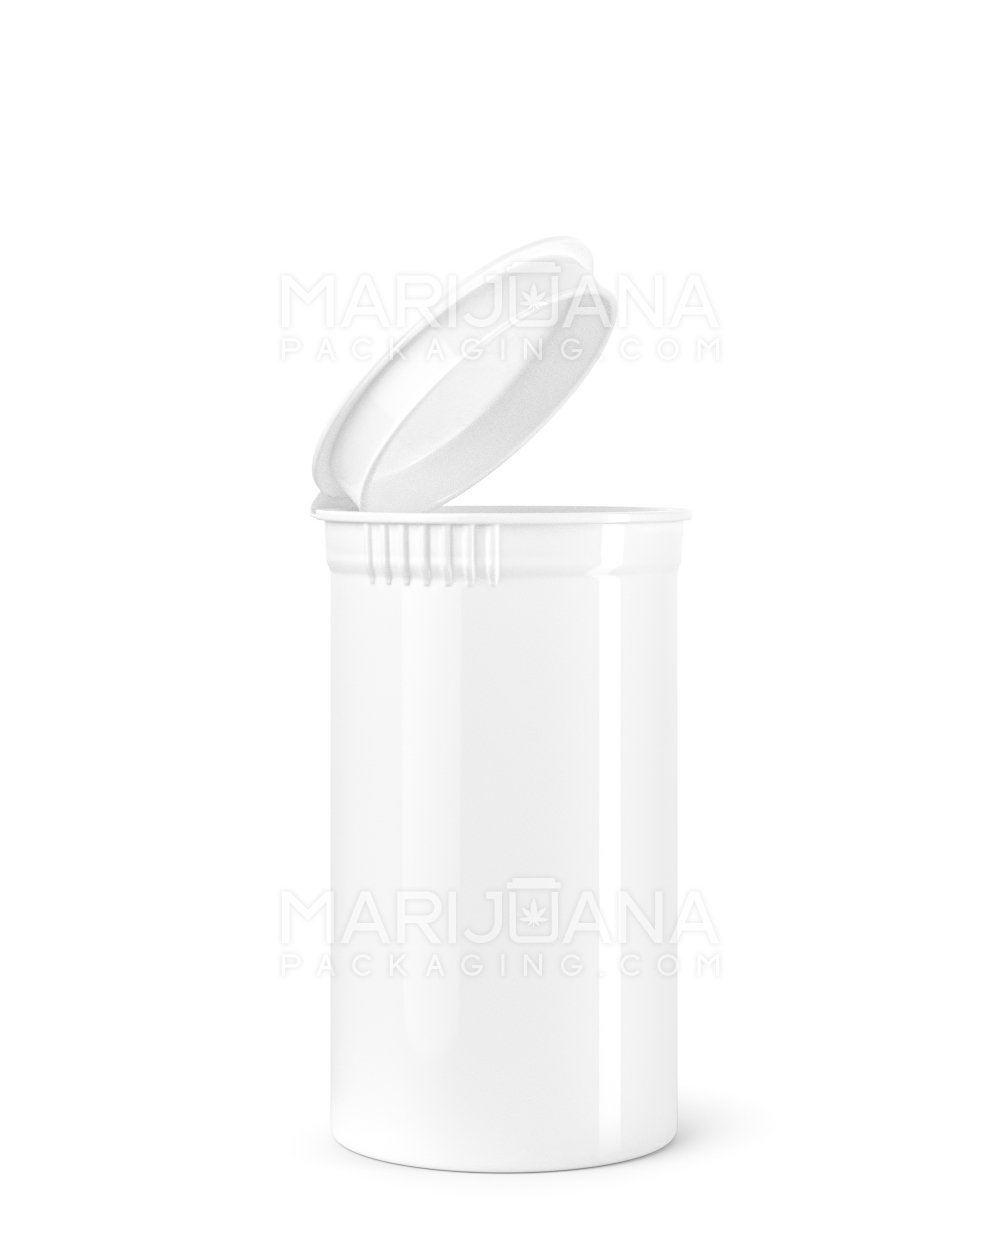 Child Resistant Opaque White Pop Top Bottles | 19dr - 3.5g | Sample - 1